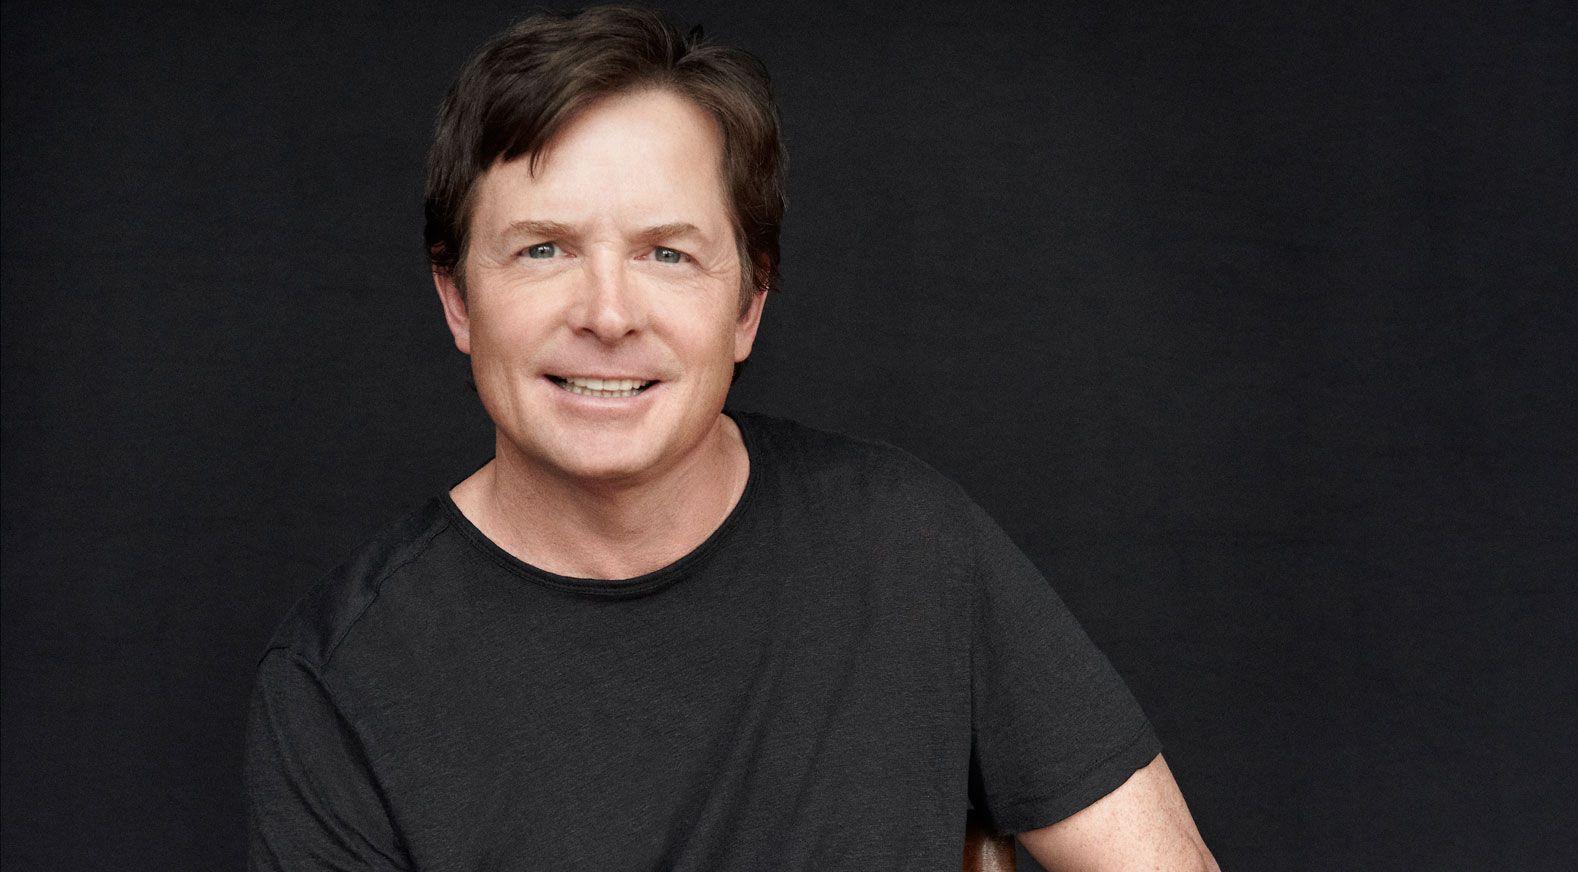 Picture of Michael J. Fox Of Celebrities